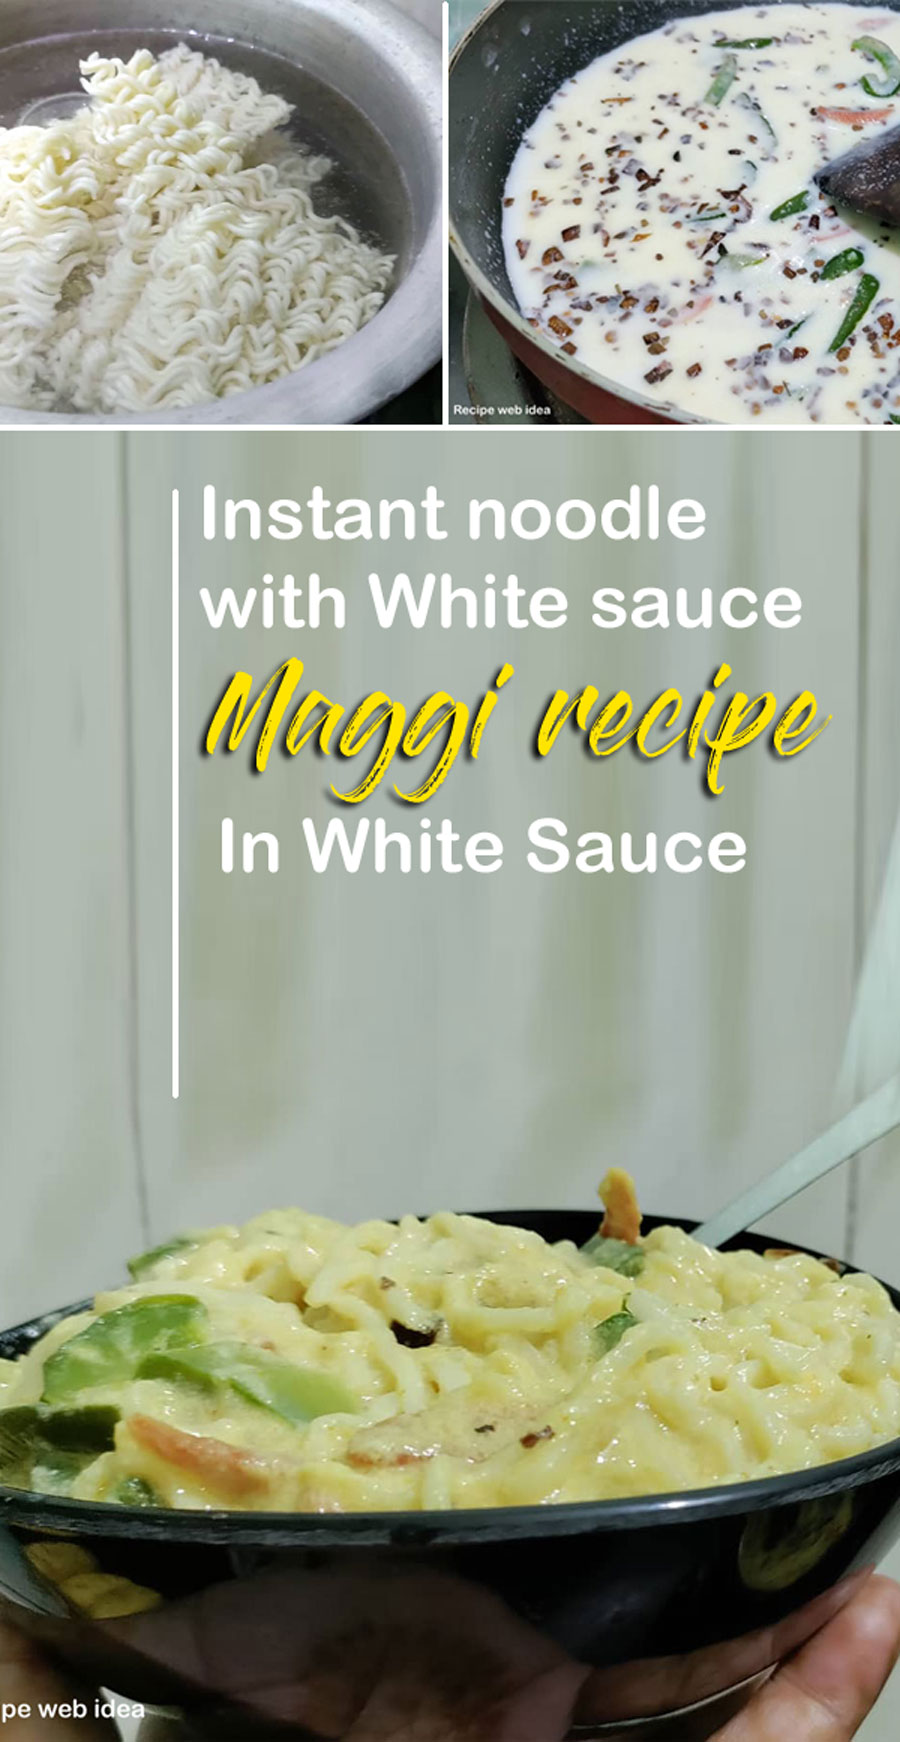  Instant noodle, Maggi recipe